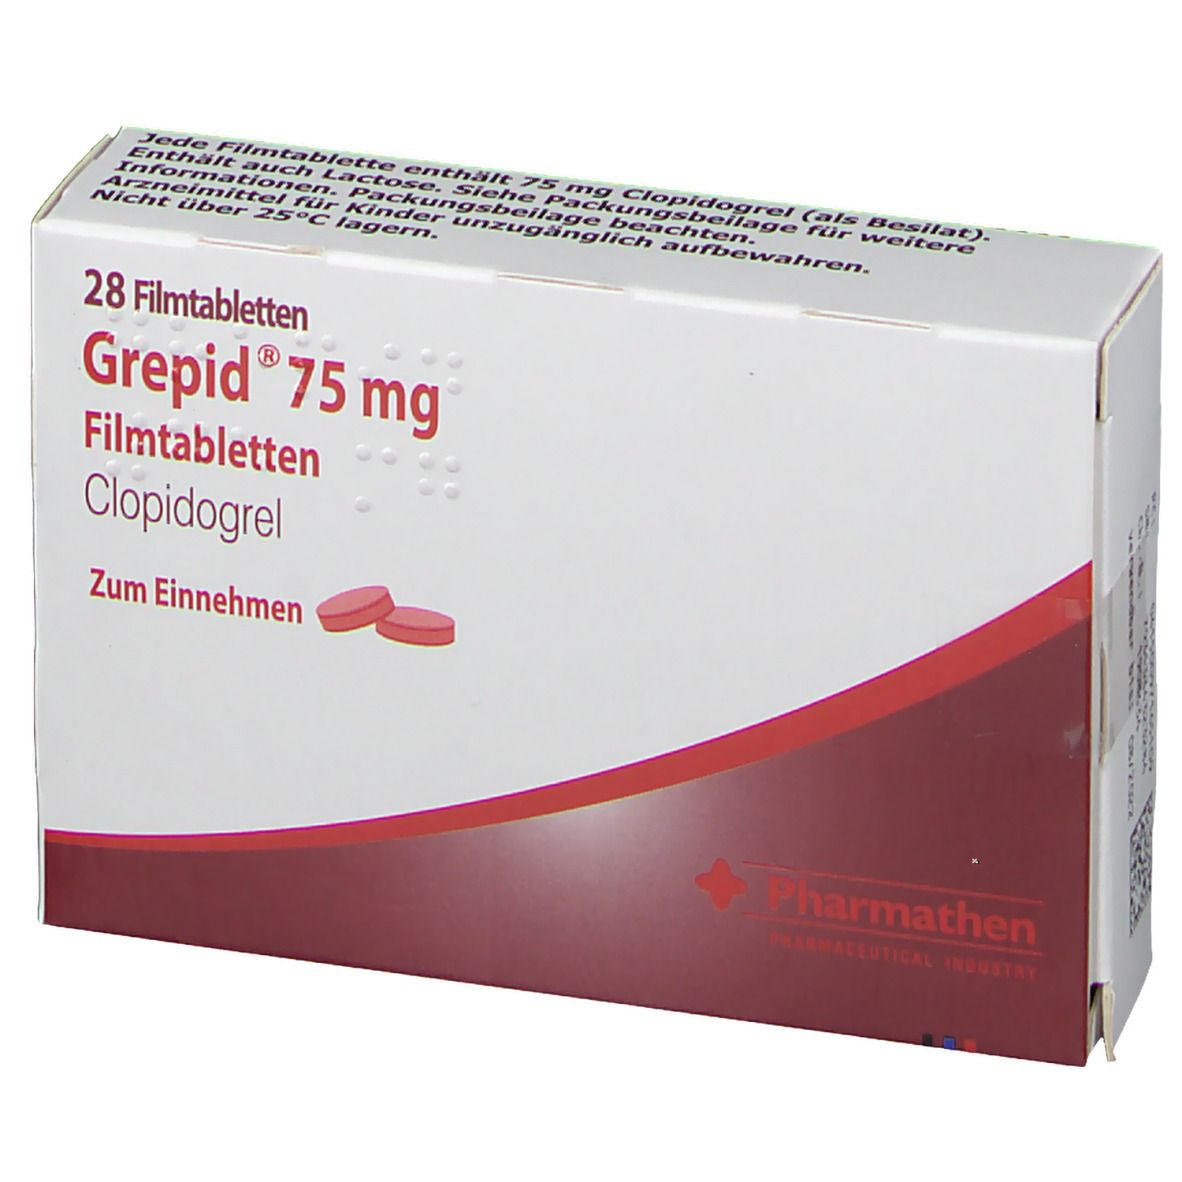 Grepid® 75 mg